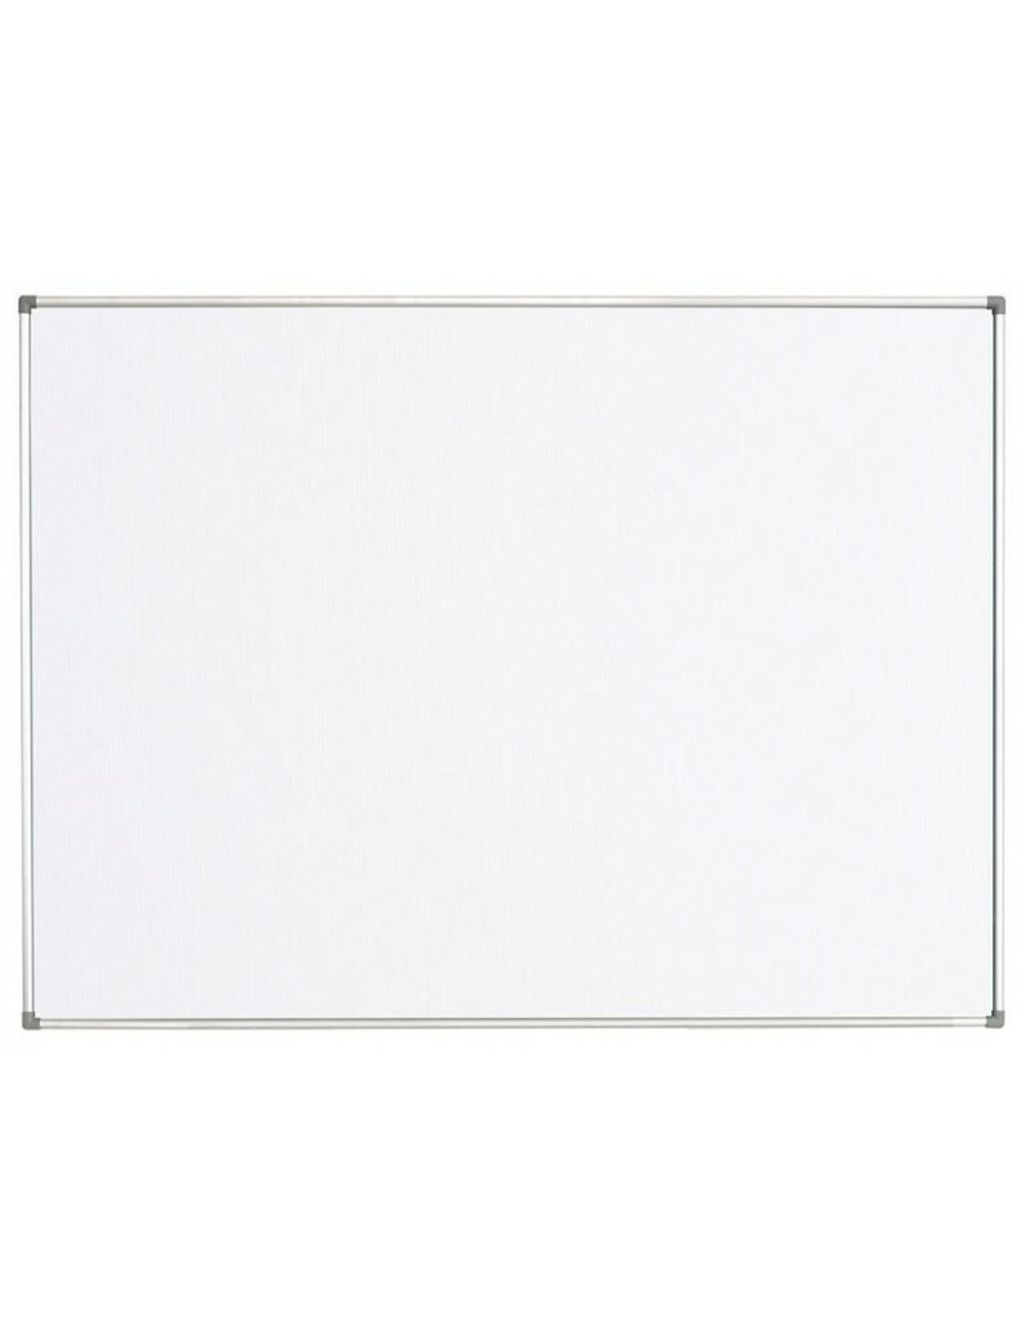 soft-notice-board-white-4-x6-sb46-kl-pj.jpg